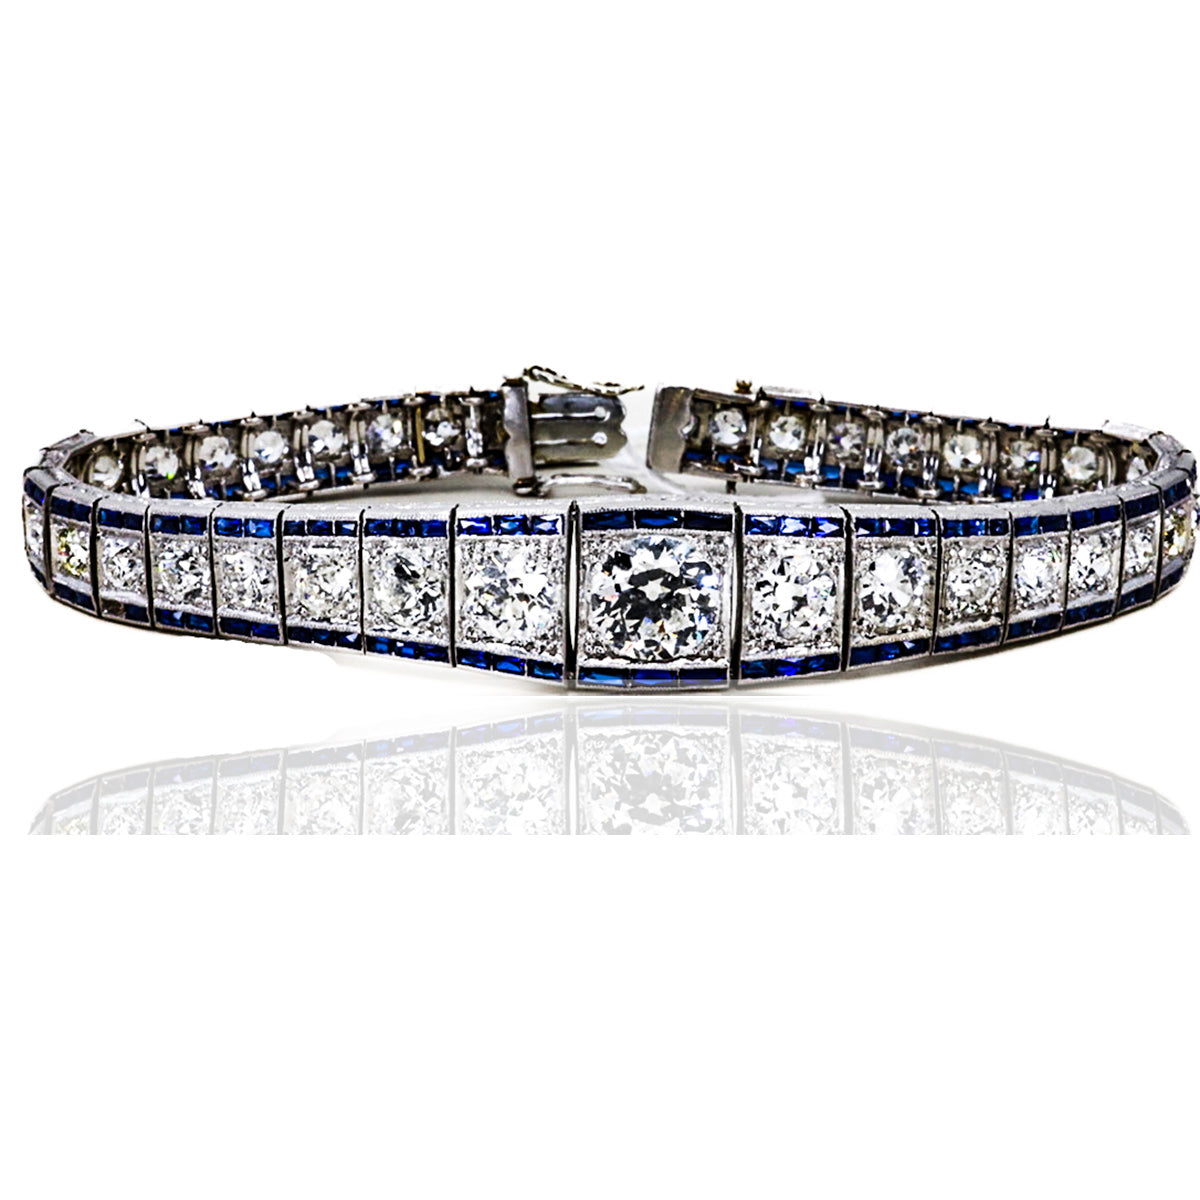 Stunning Art Deco Diamond Bracelet